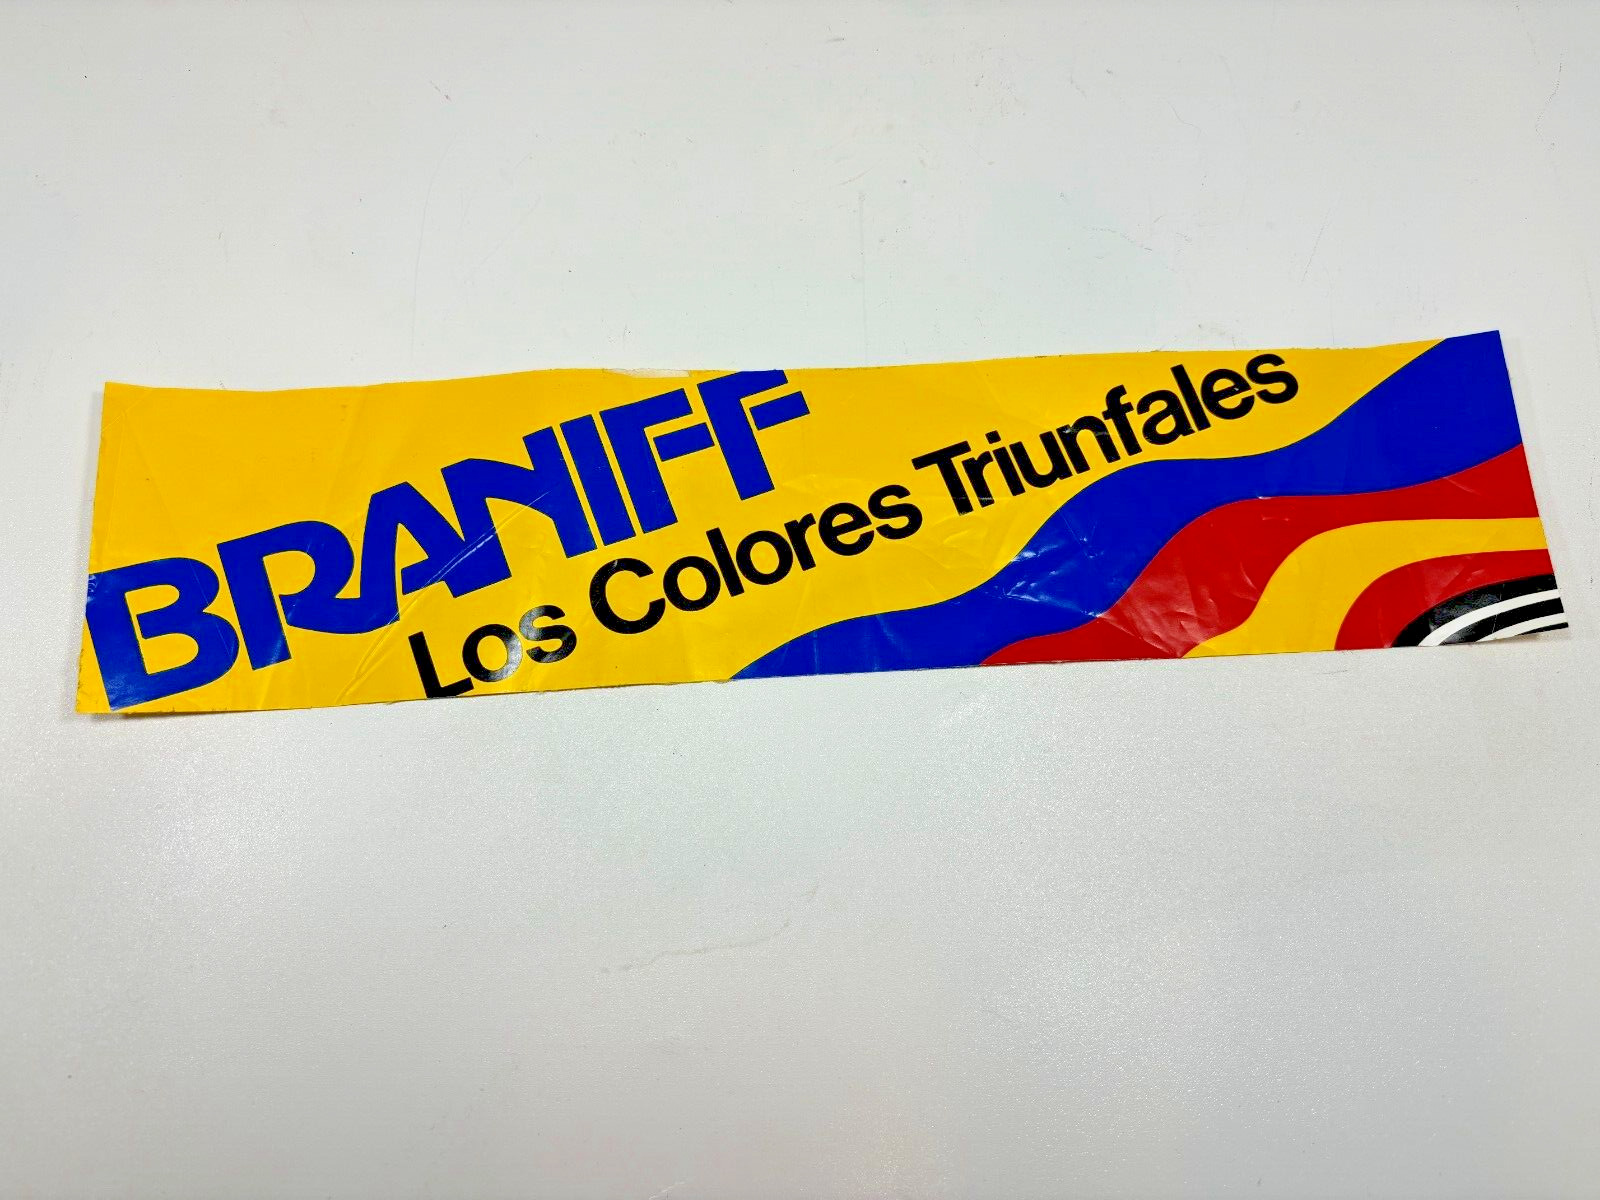 Rare Vintage Braniff Airlines Bumper Sticker Los Colores Triunfales - Spanish